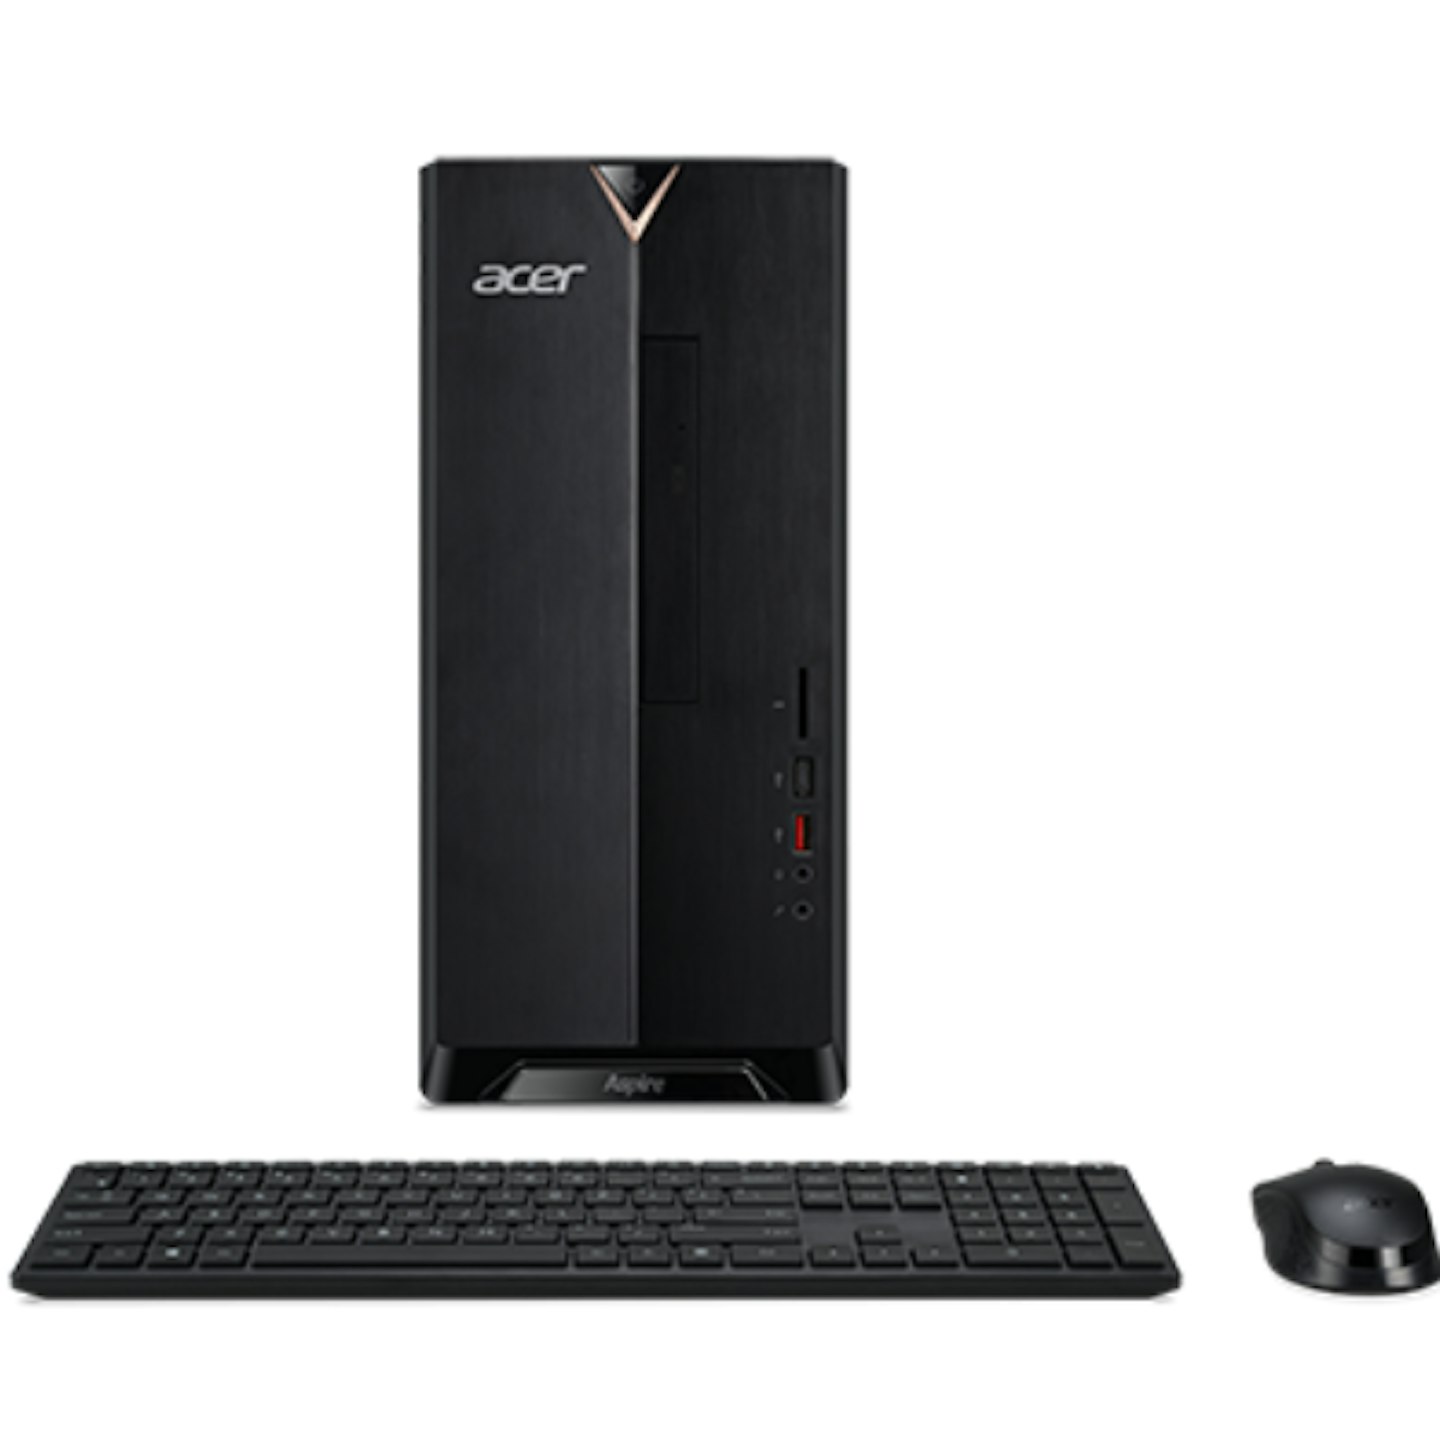 ACER Aspire XC-1660 Desktop PC